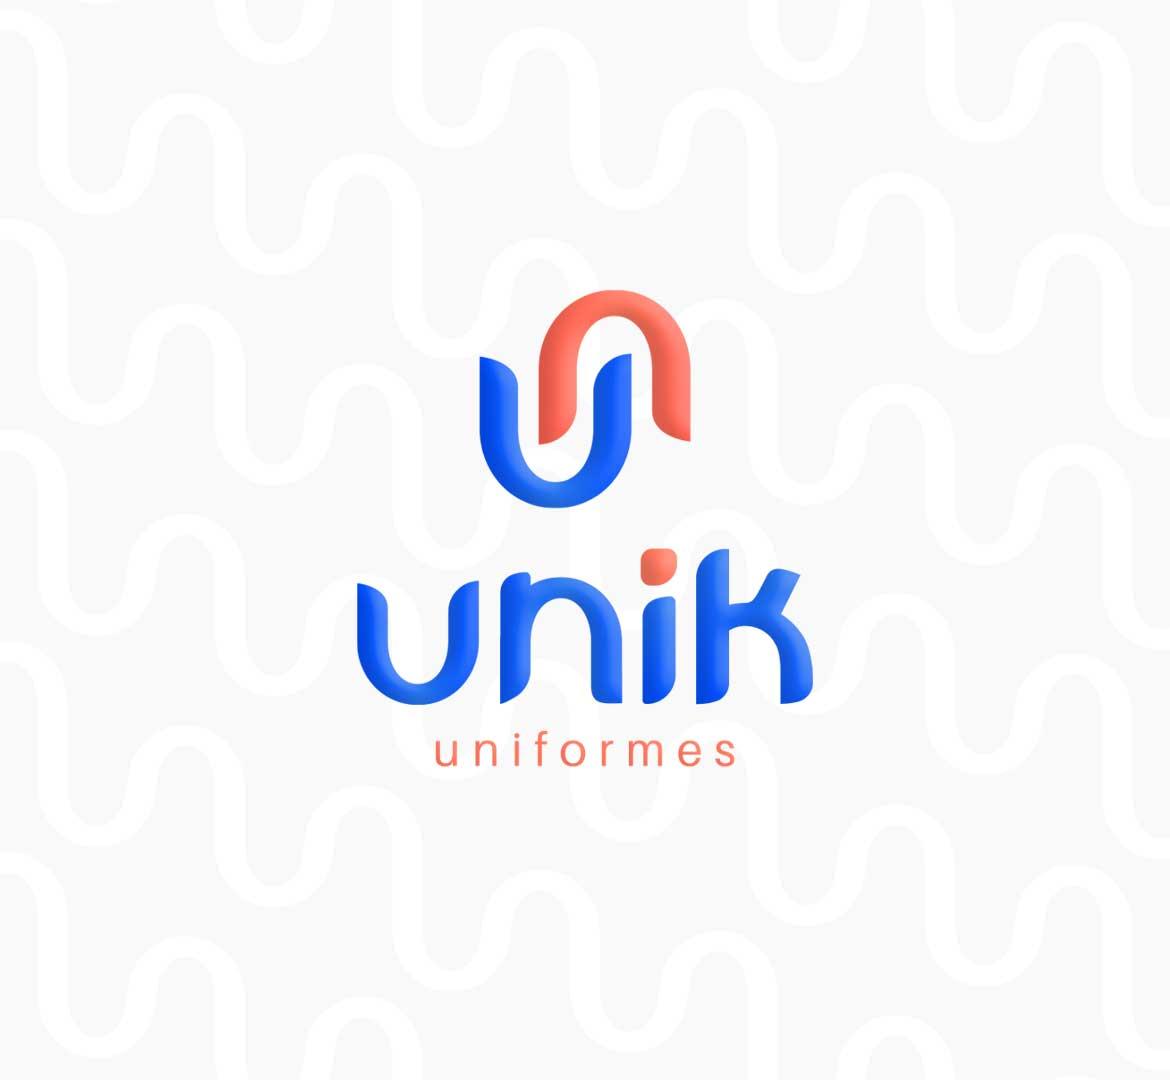 Product Unik Uniformes • Agência Really • Branding image